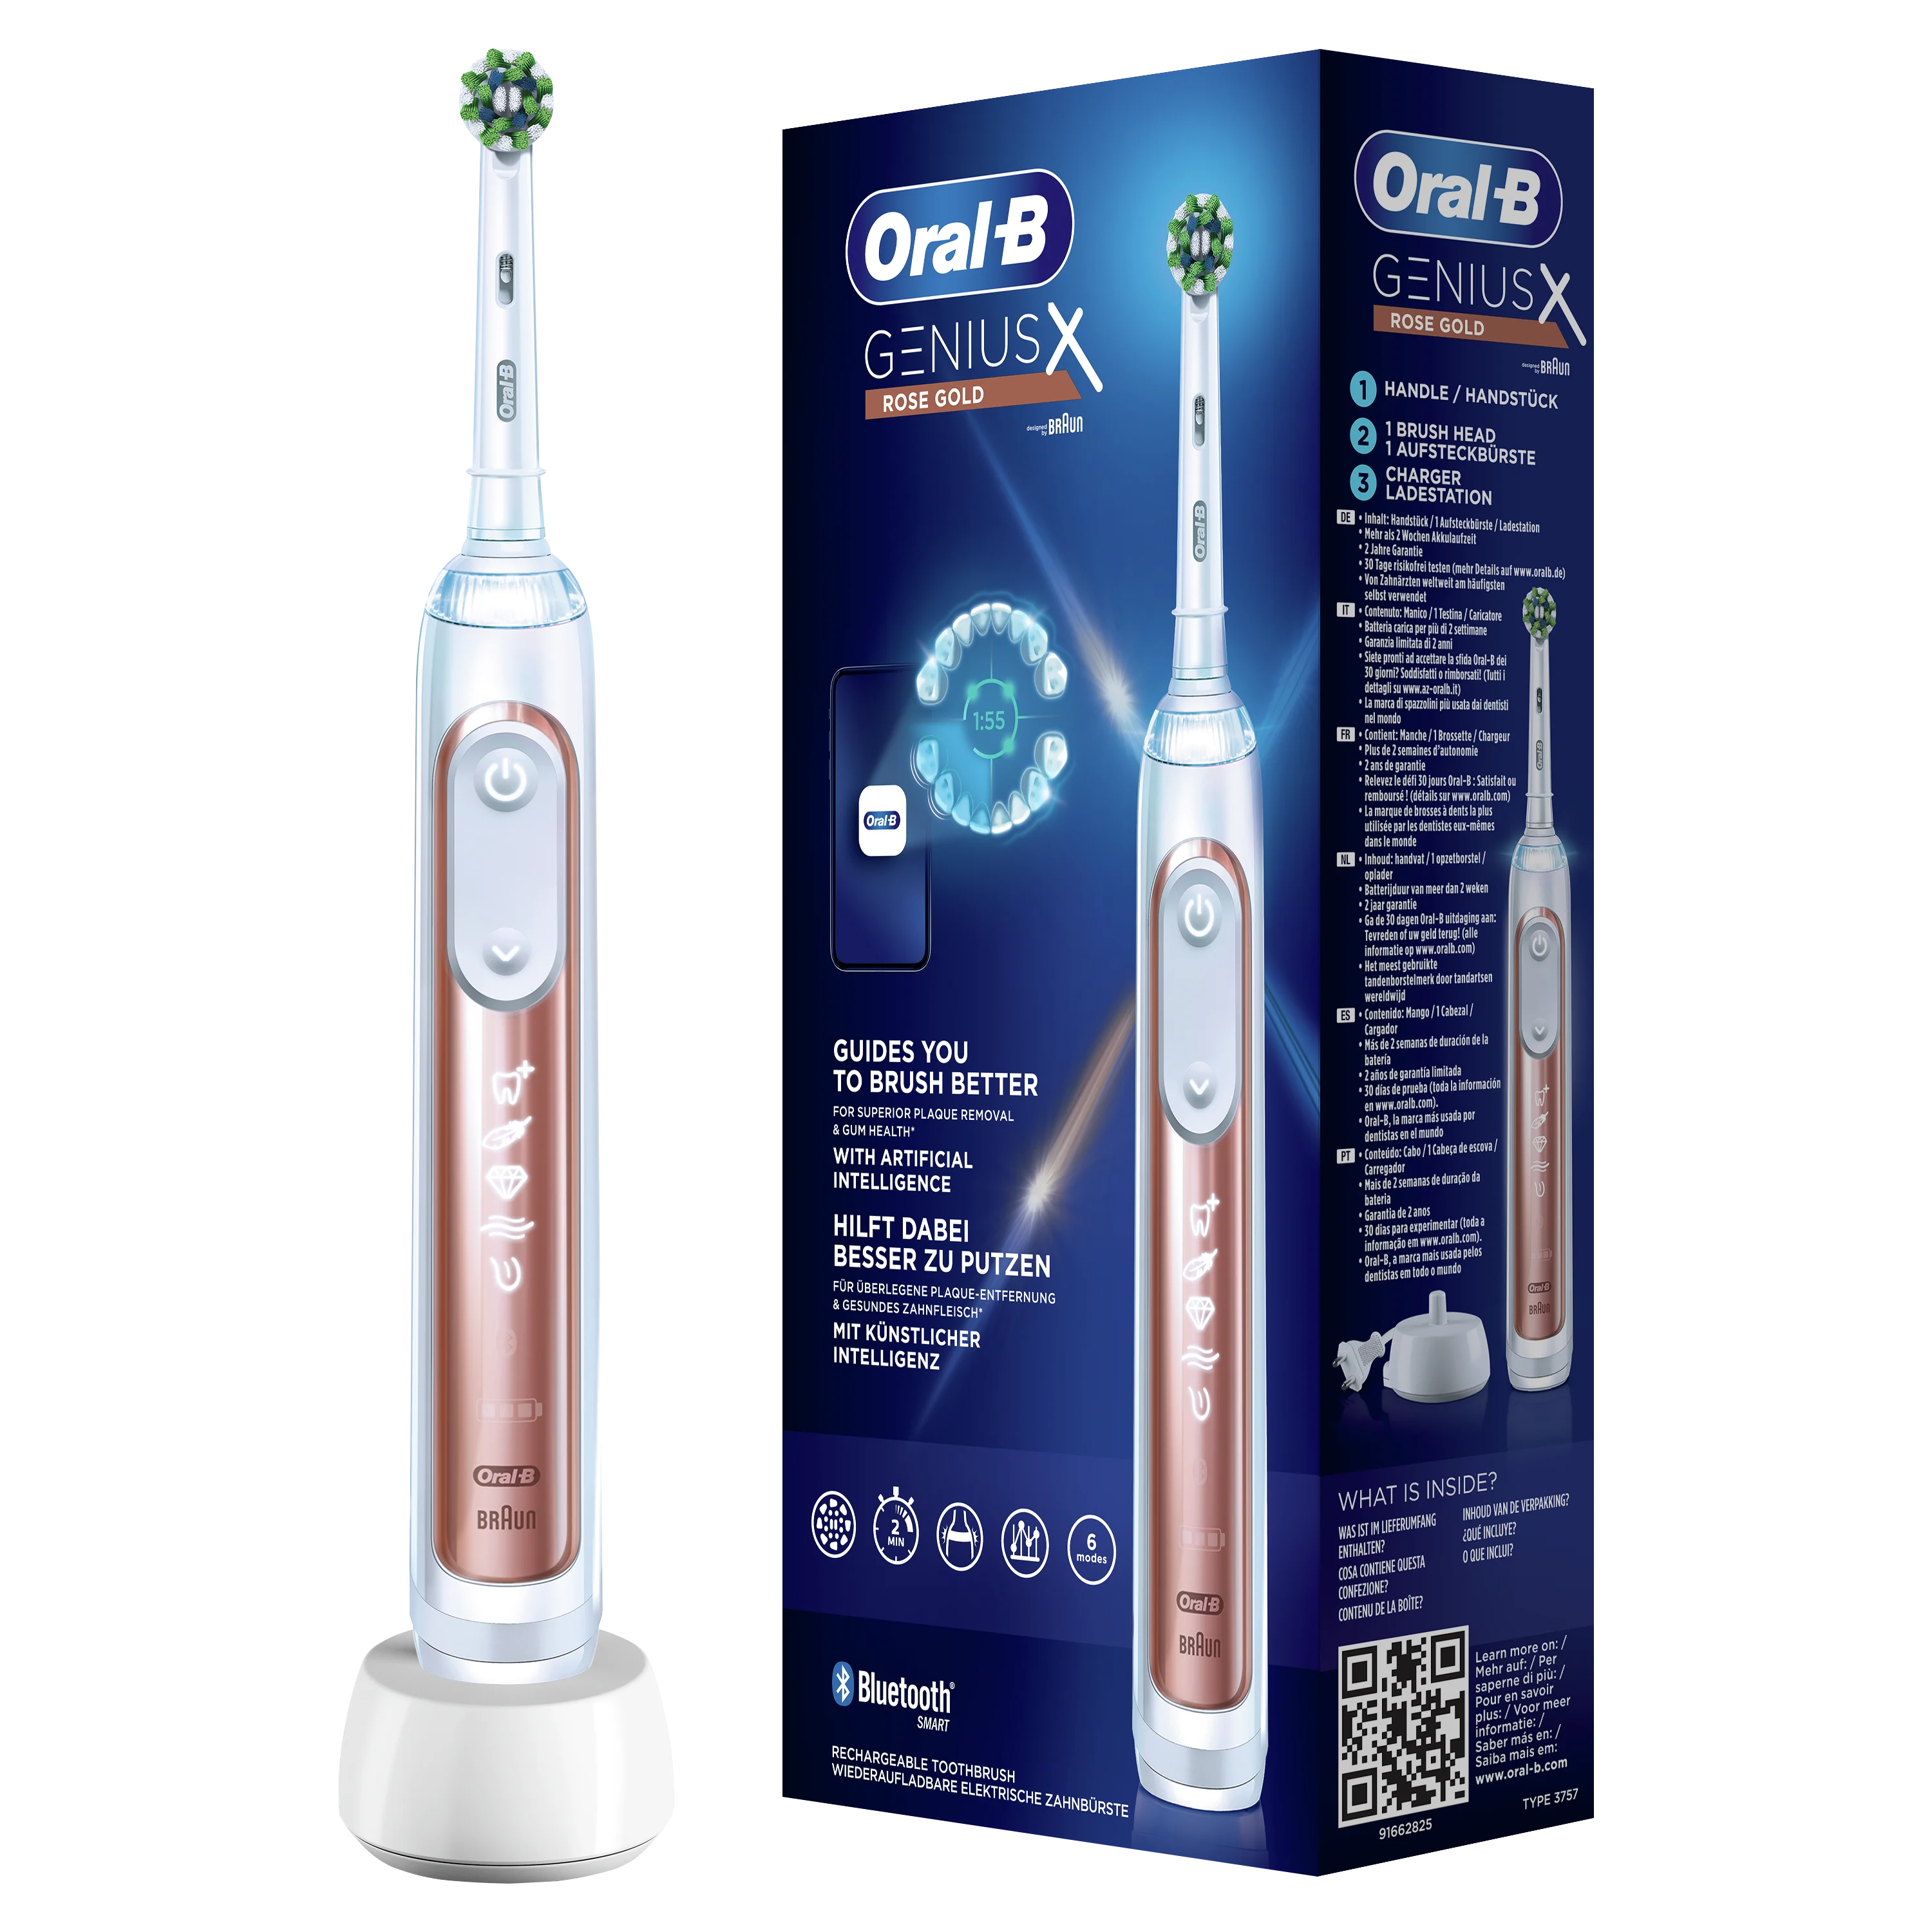 Riskant huurder Mysterie Oral-B Speciale Editie Genius X Elektrische Tandenborstel | Oral-B